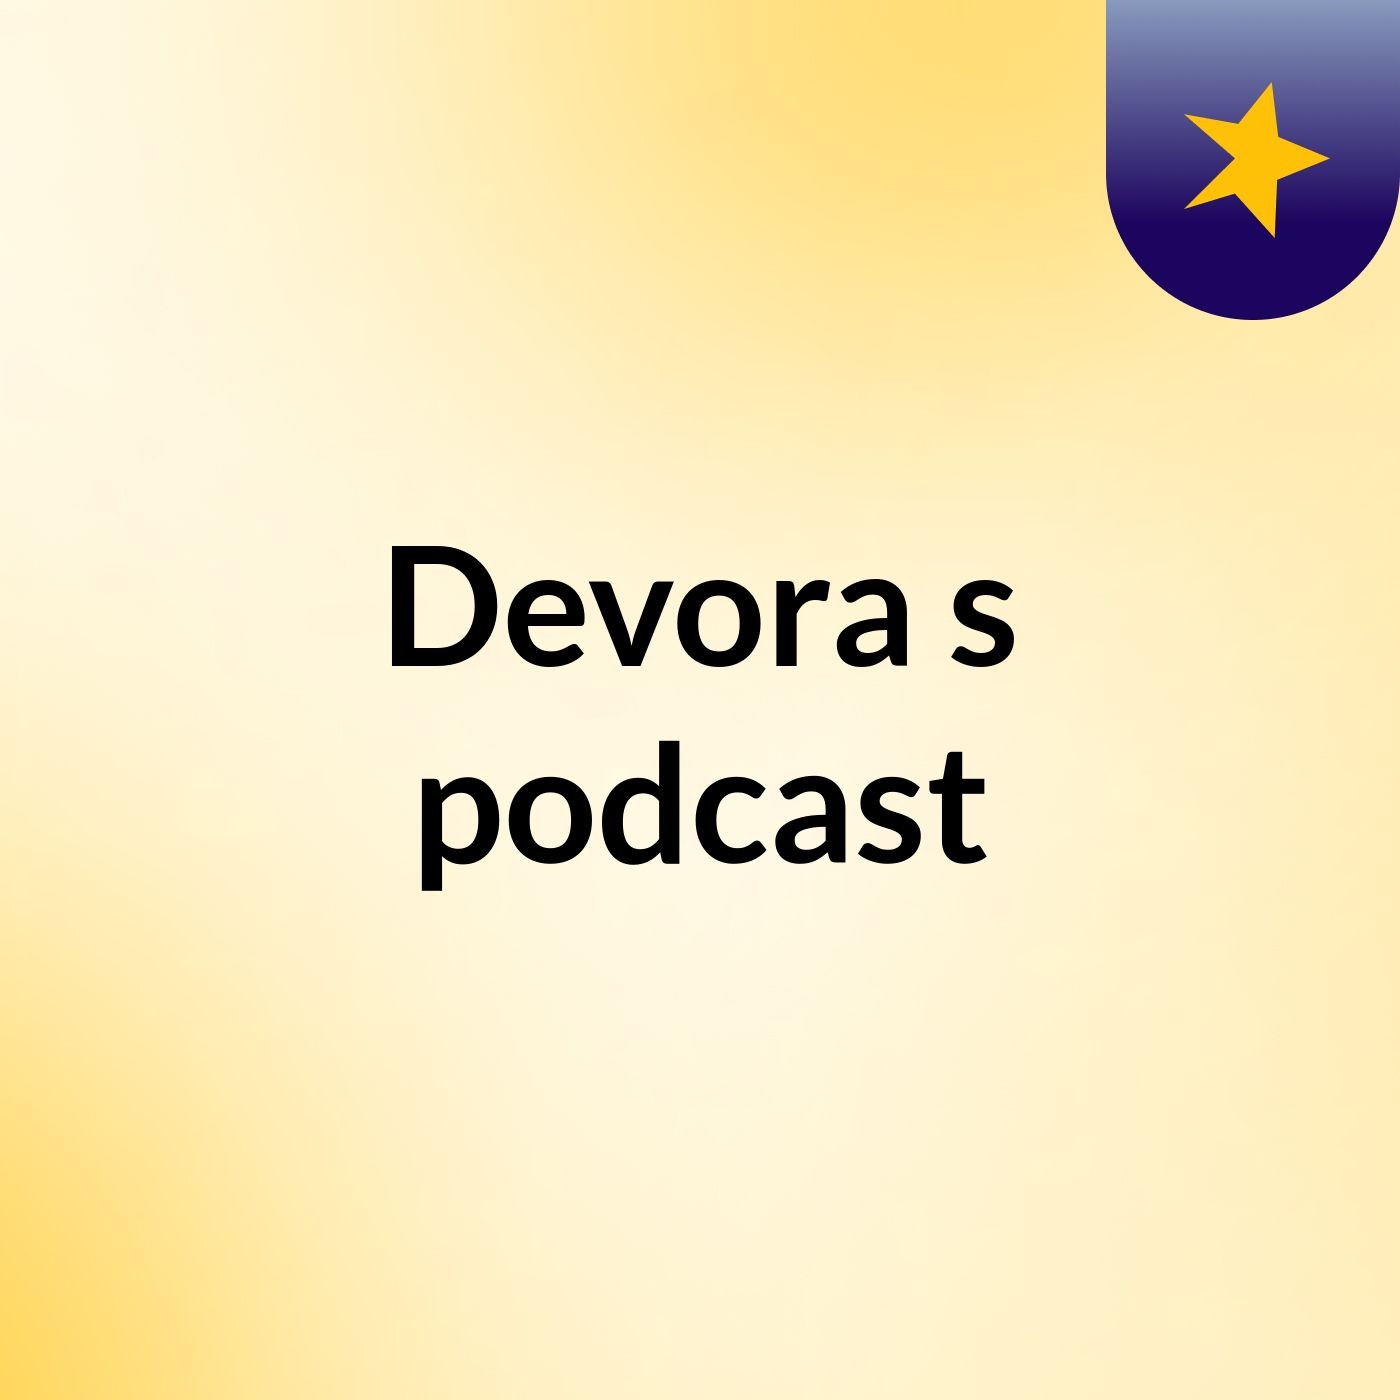 Episode 3 - Devora's podcast